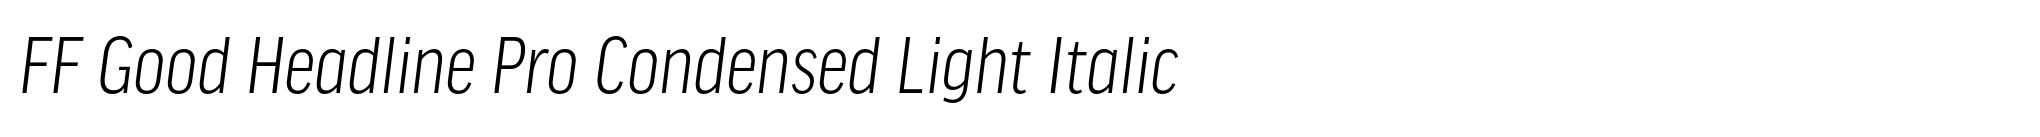 FF Good Headline Pro Condensed Light Italic image